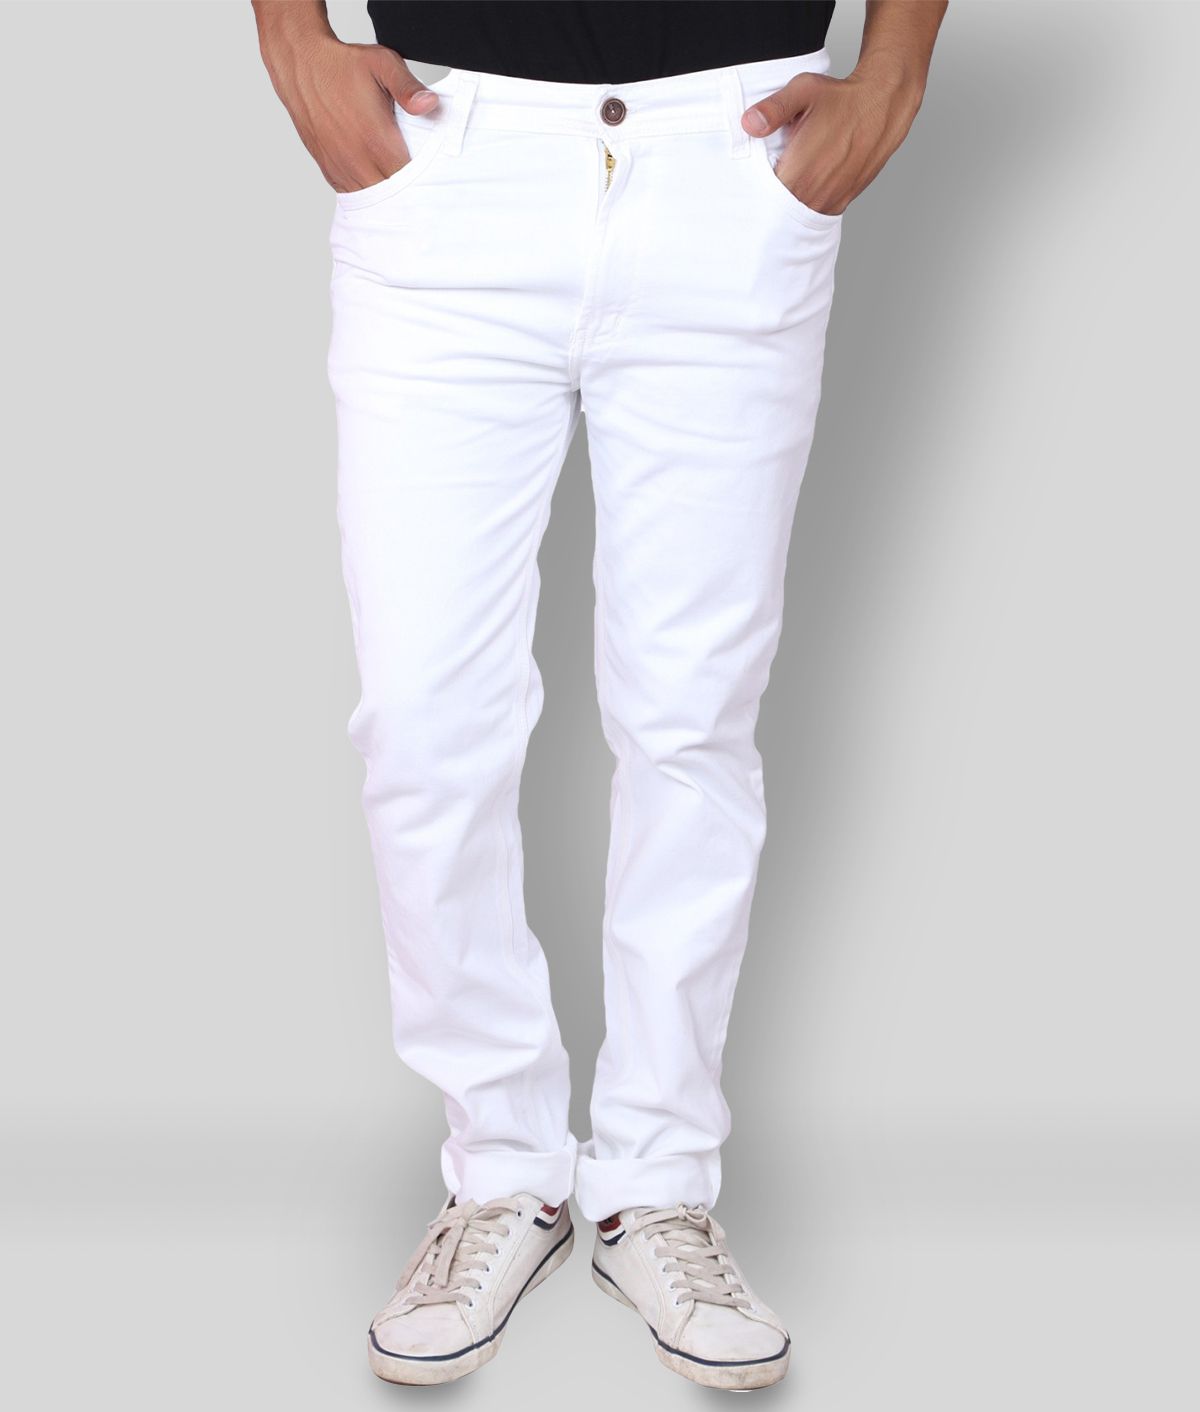     			X20 Jeans - White Cotton Blend Regular Fit Men's Jeans ( Pack of 1 )